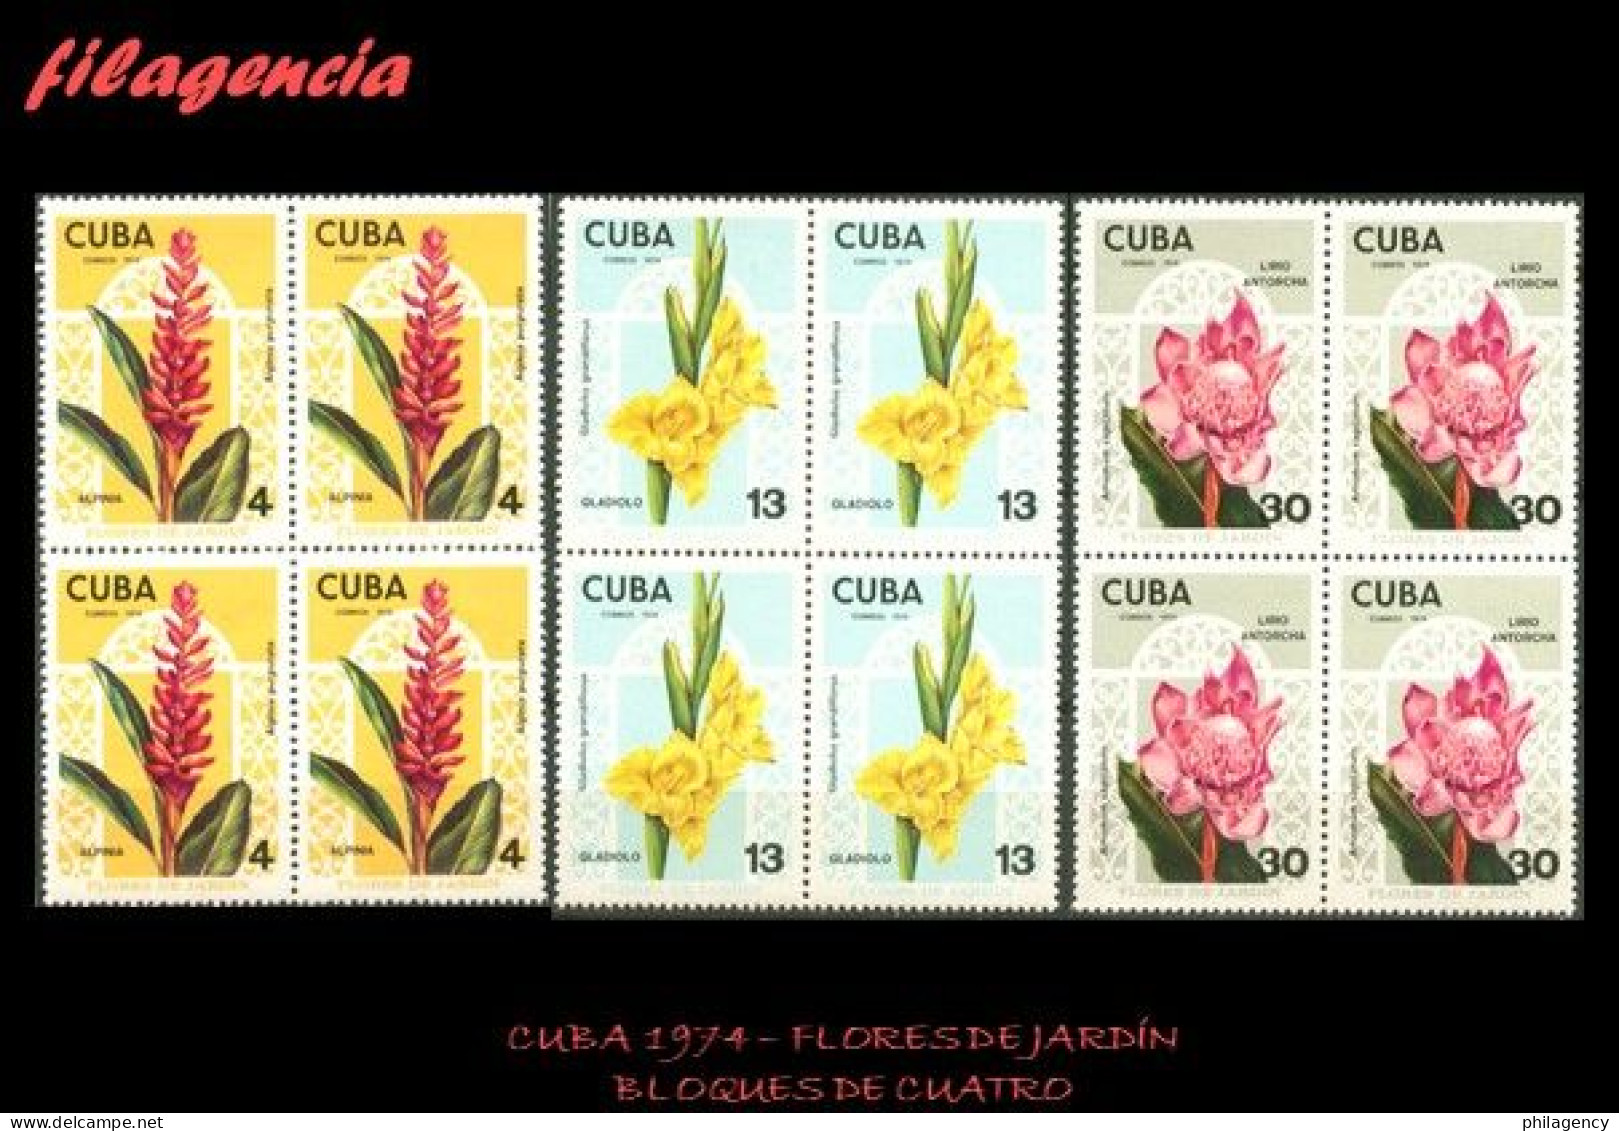 CUBA. BLOQUES DE CUATRO. 1974-16 FLORA. FLORES DE JARDÍN - Nuovi